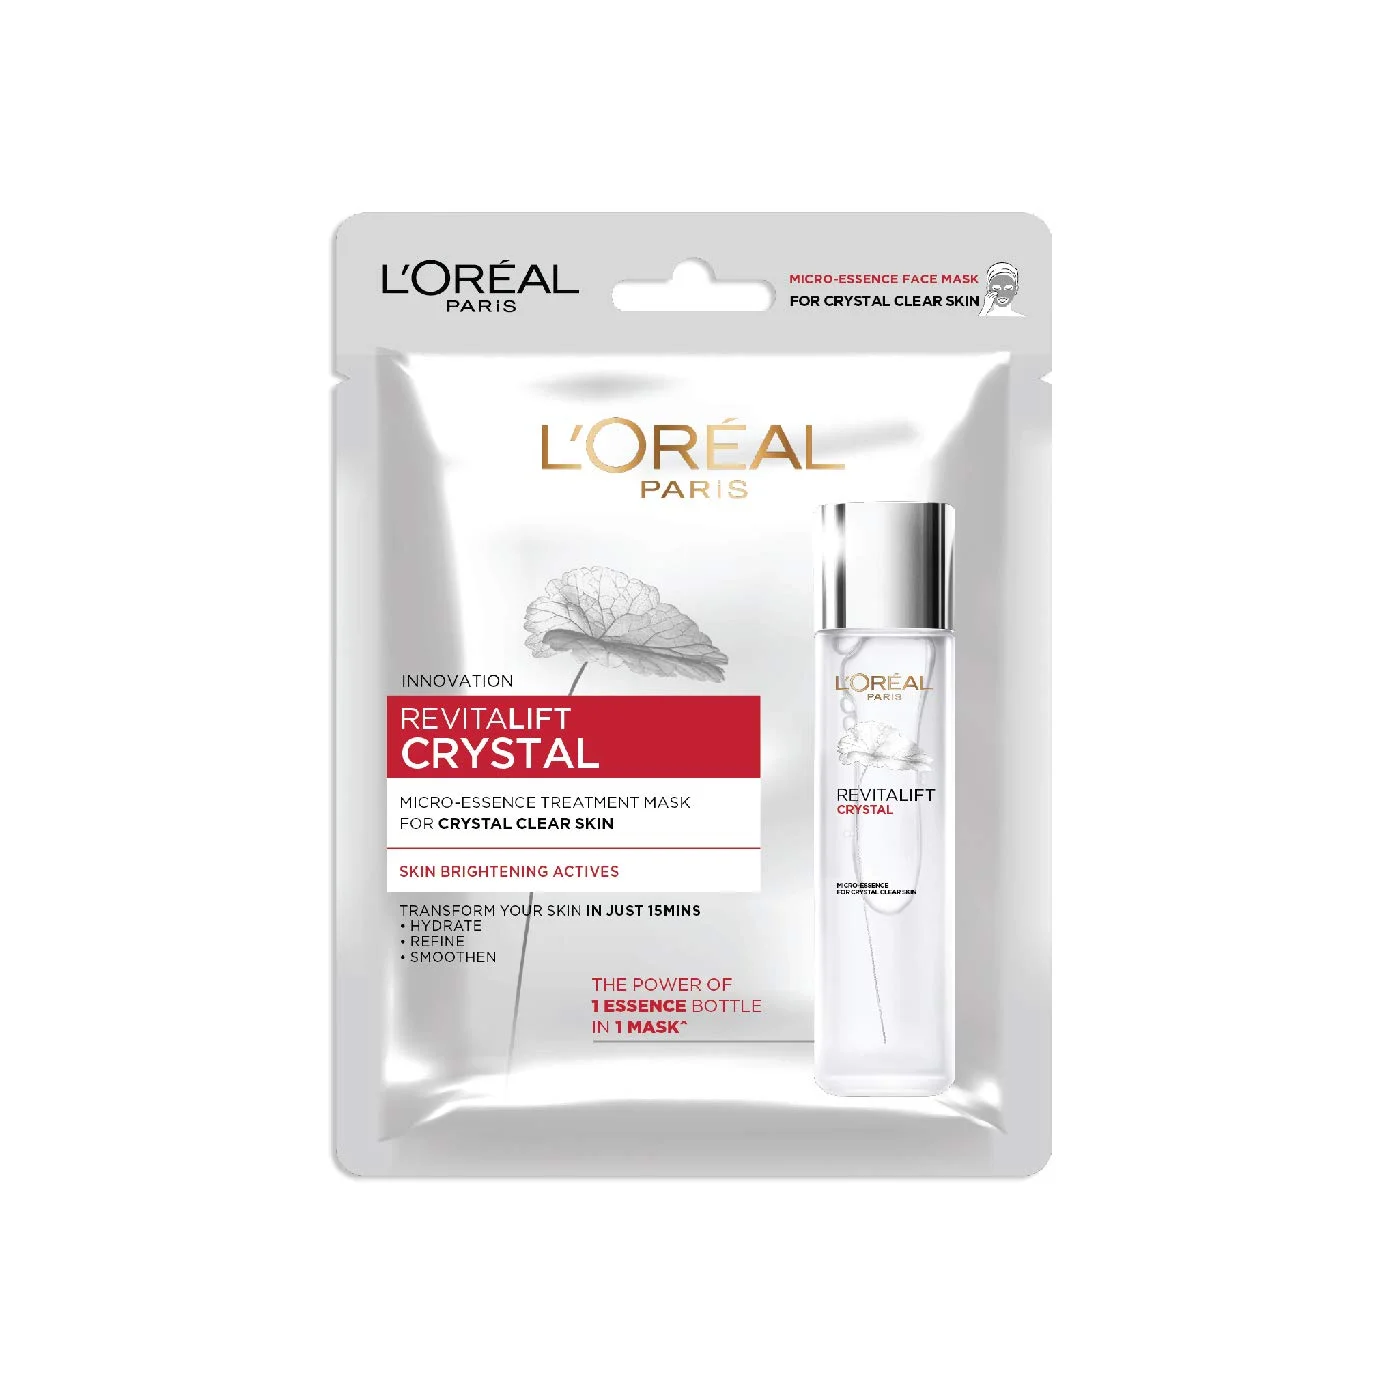 L'Oreal Paris Revitalift Crystal Micro-Essence Treatment Mask